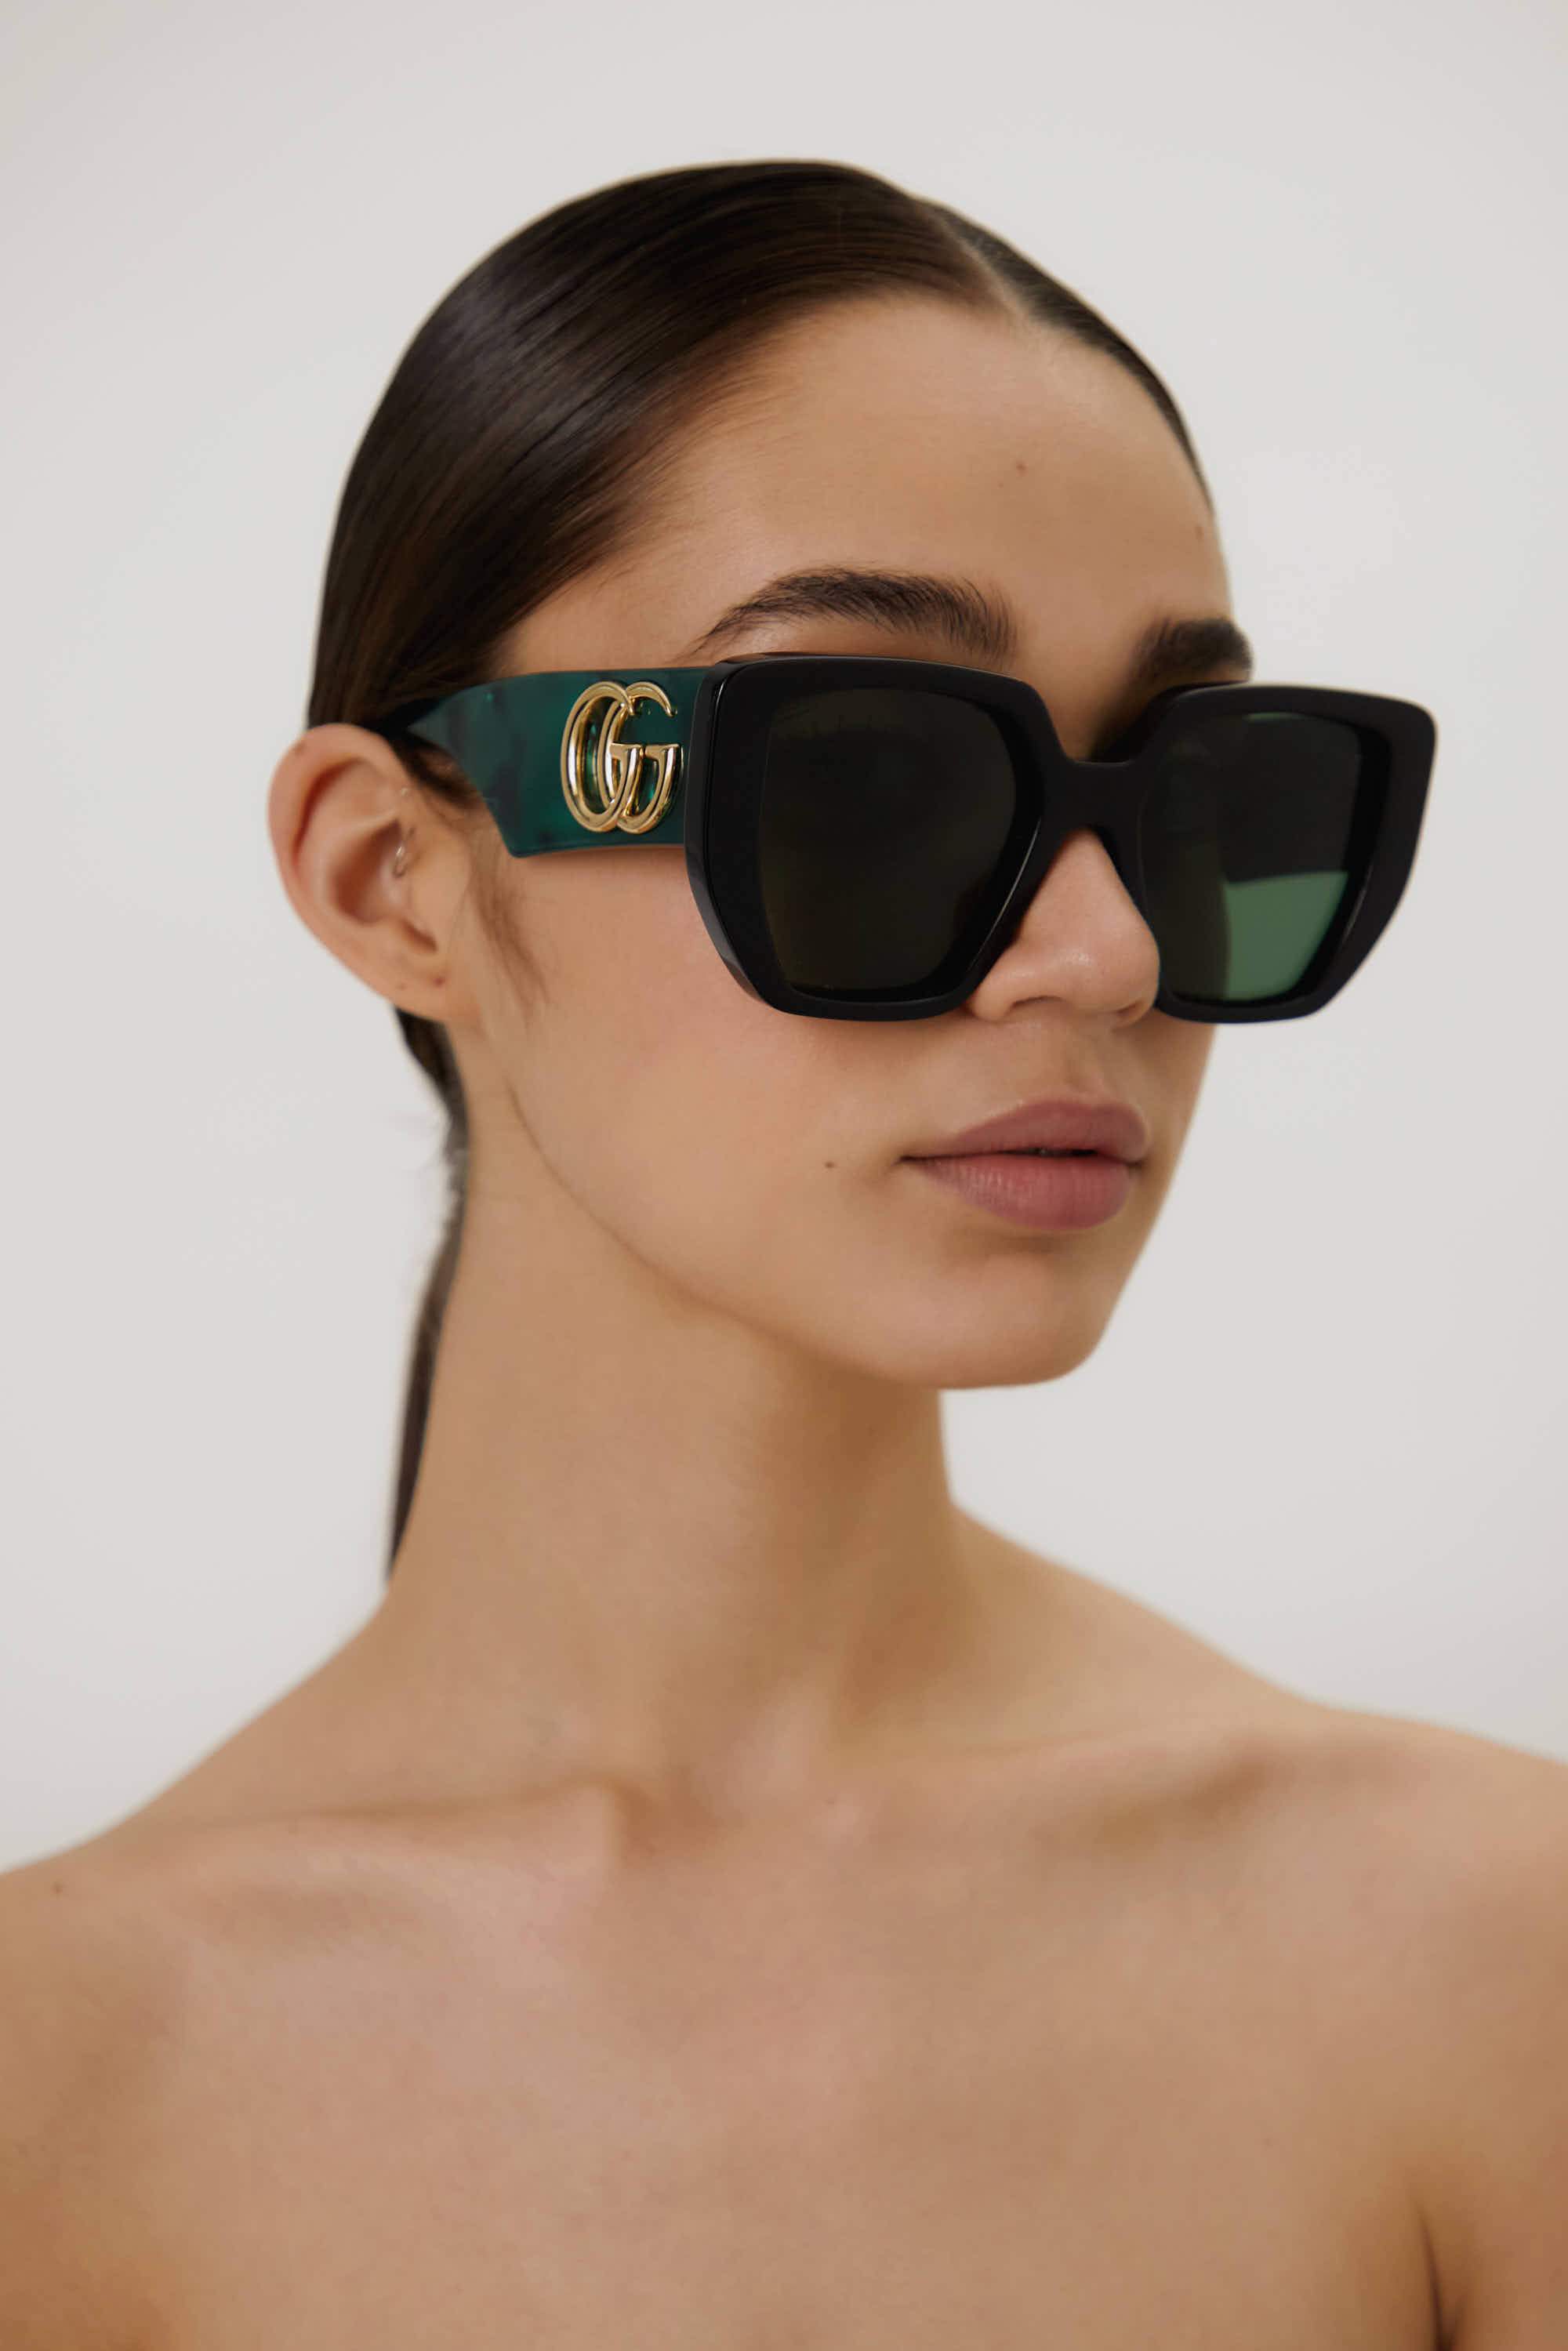 Eigenaardig Scarp boete Gucci GG0956S oversized black and green sunglasses with maxi logo